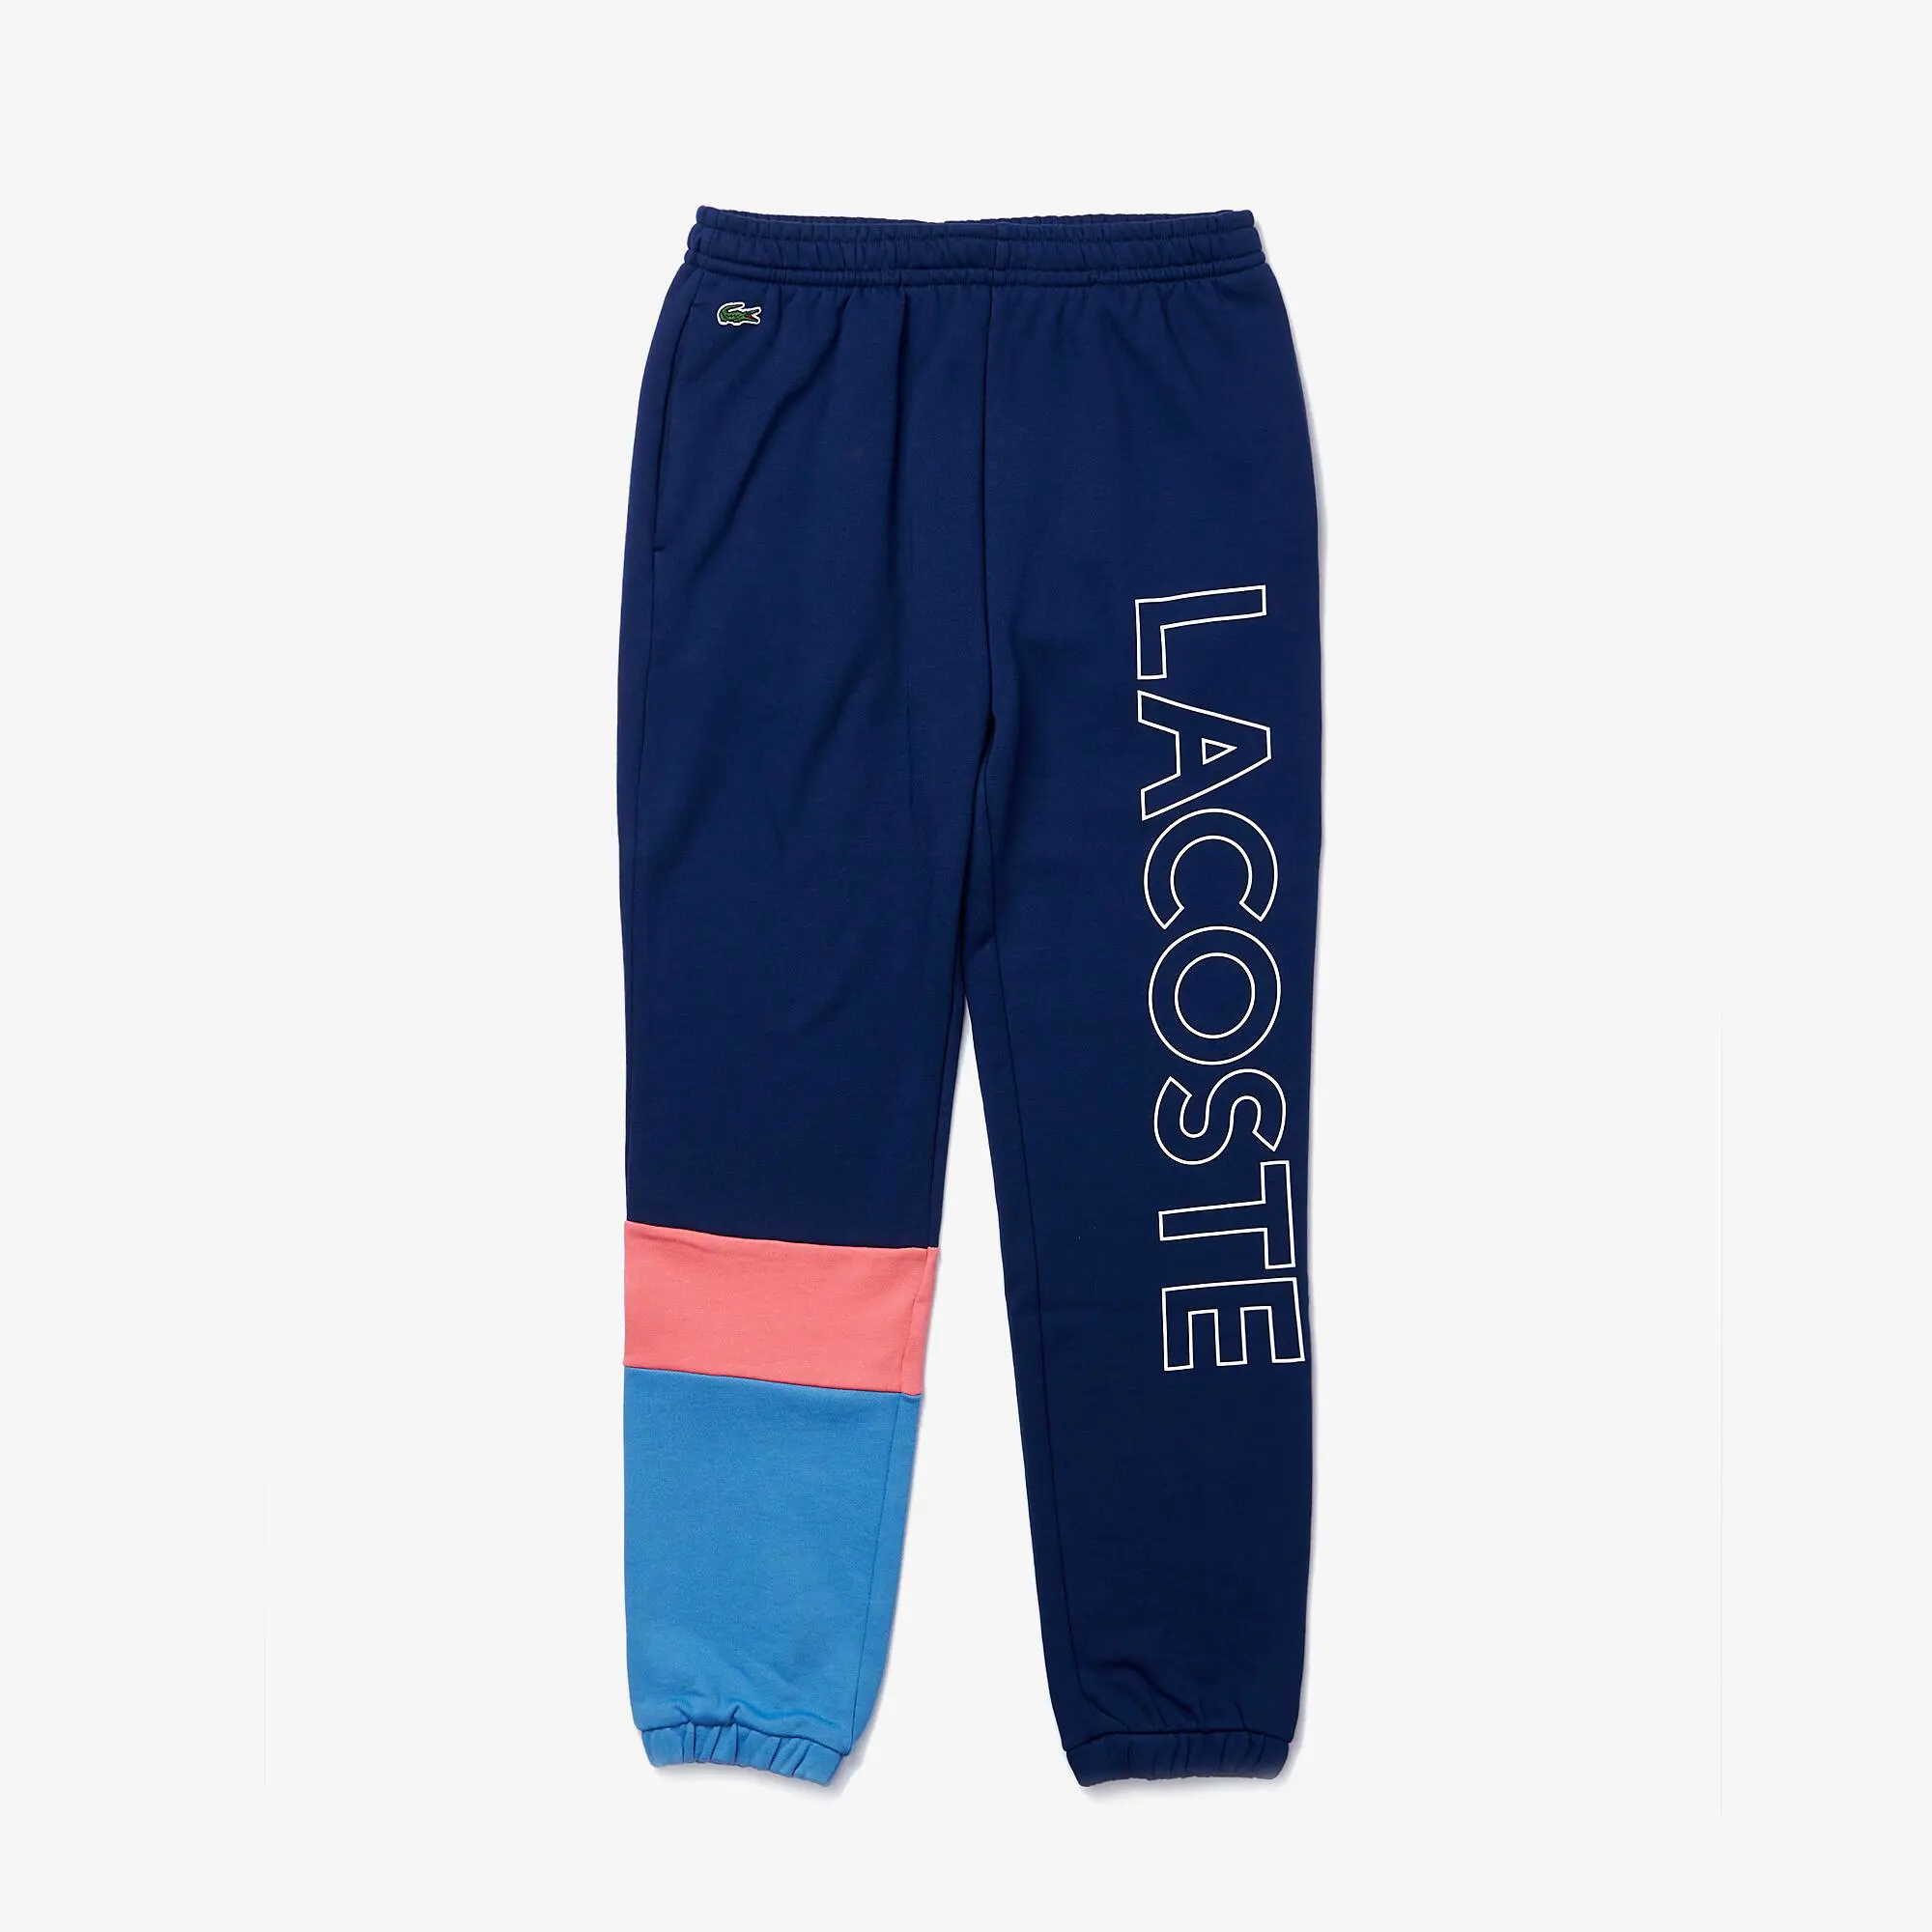 Lacoste Men’s Colorblock Fleece Sweatpants. 2